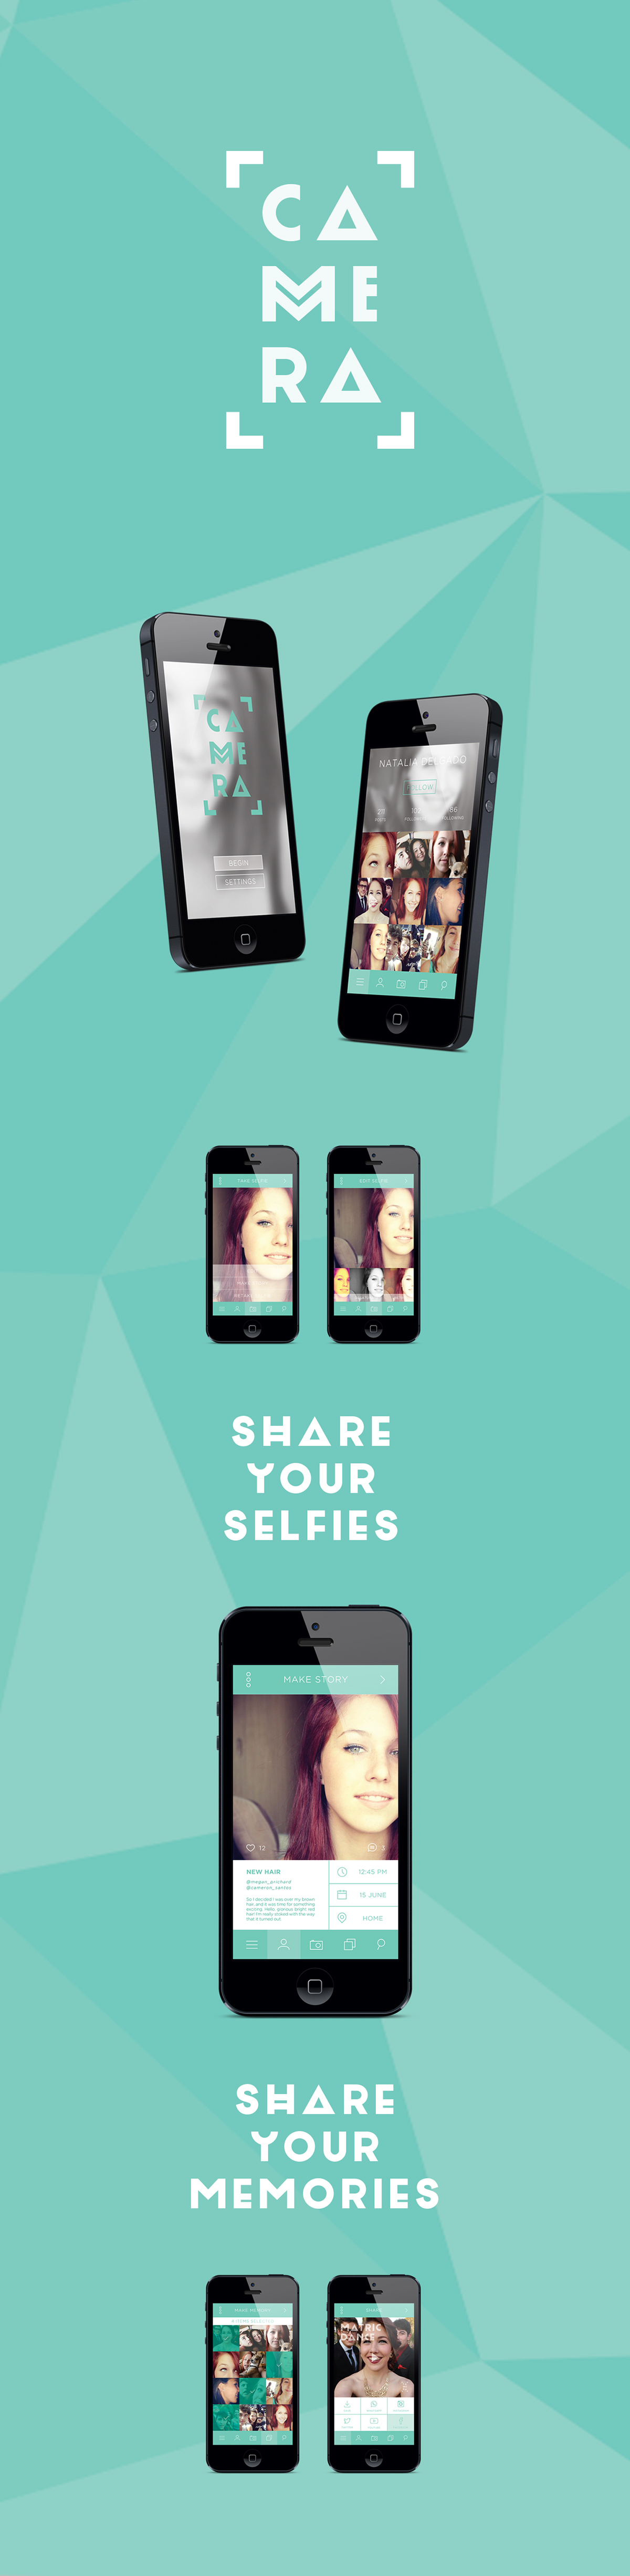 Mobile app concept app iphone app selfie Camera app interface design flat design minimalist grey turquoise social media Selfie app self-portrait identity